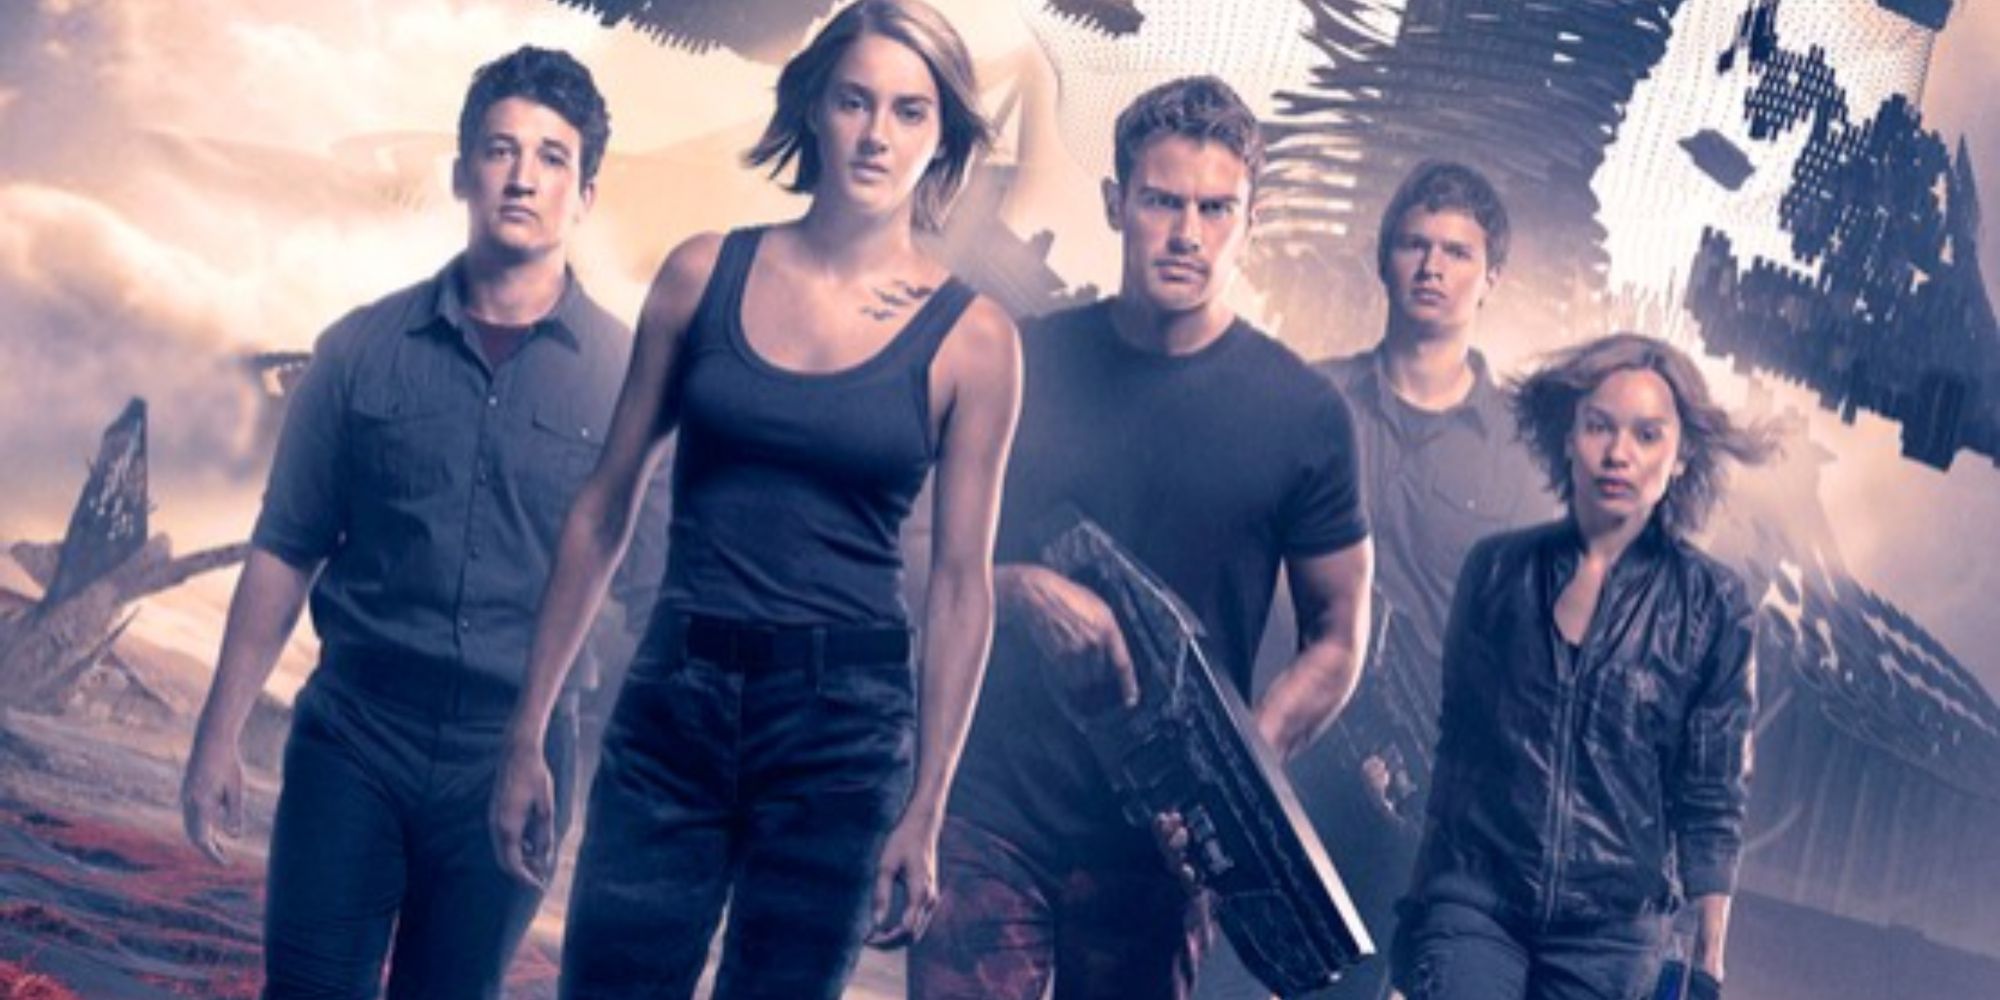 Divergent Series: Allegiant Movie Characters